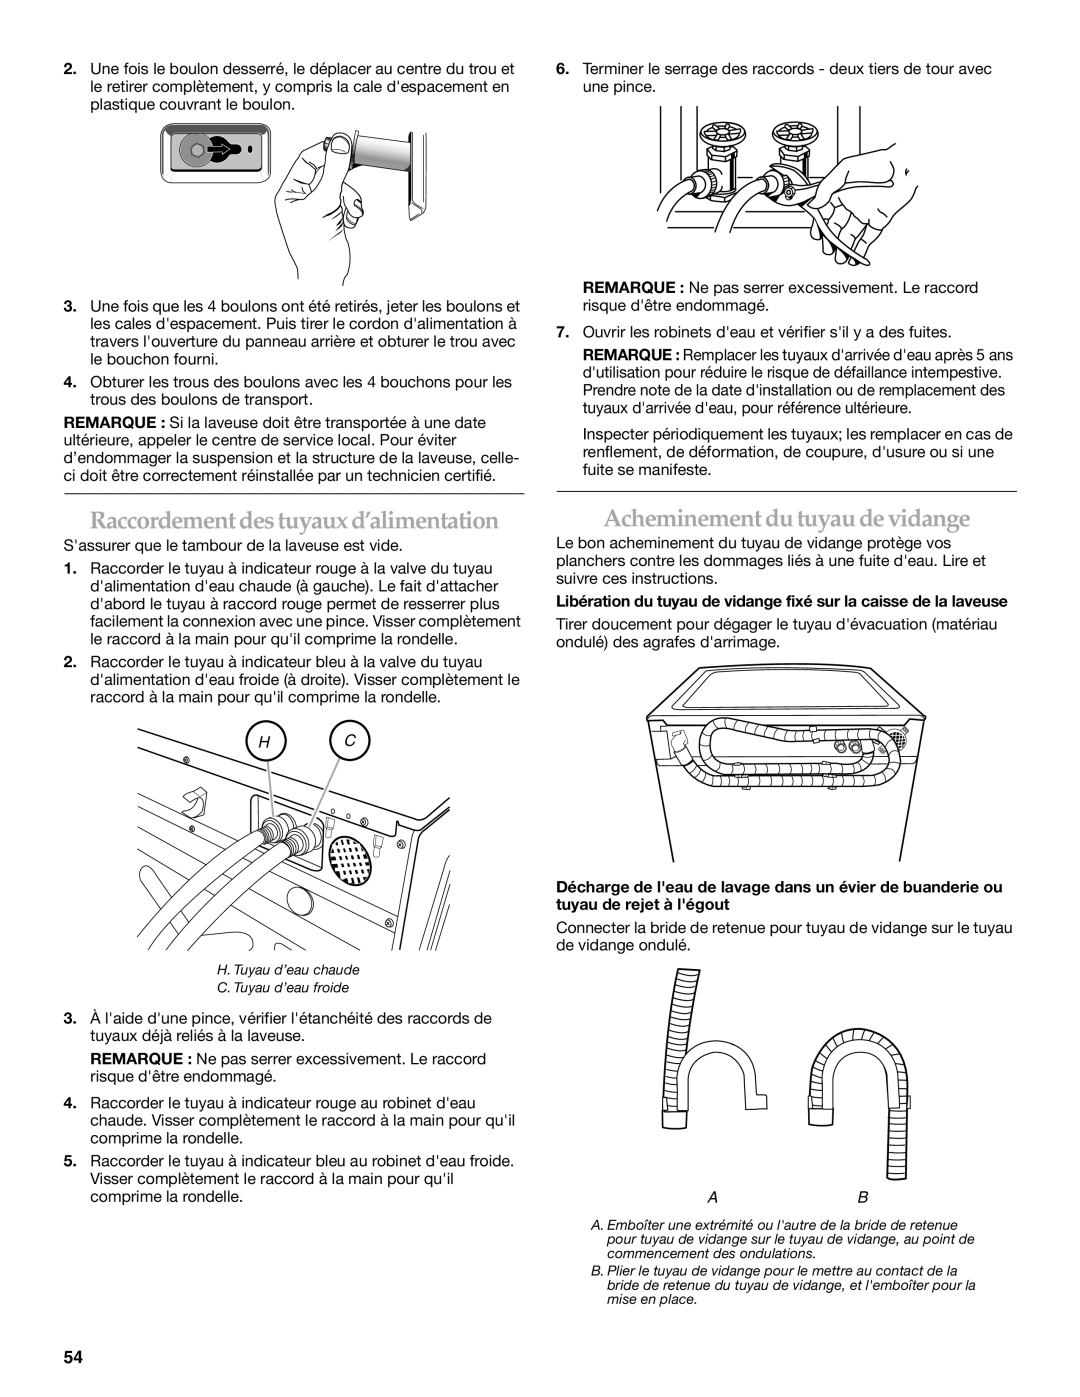 Maytag 8182969 manual Raccordement des tuyaux d’alimentation, Acheminement du tuyau de vidange 